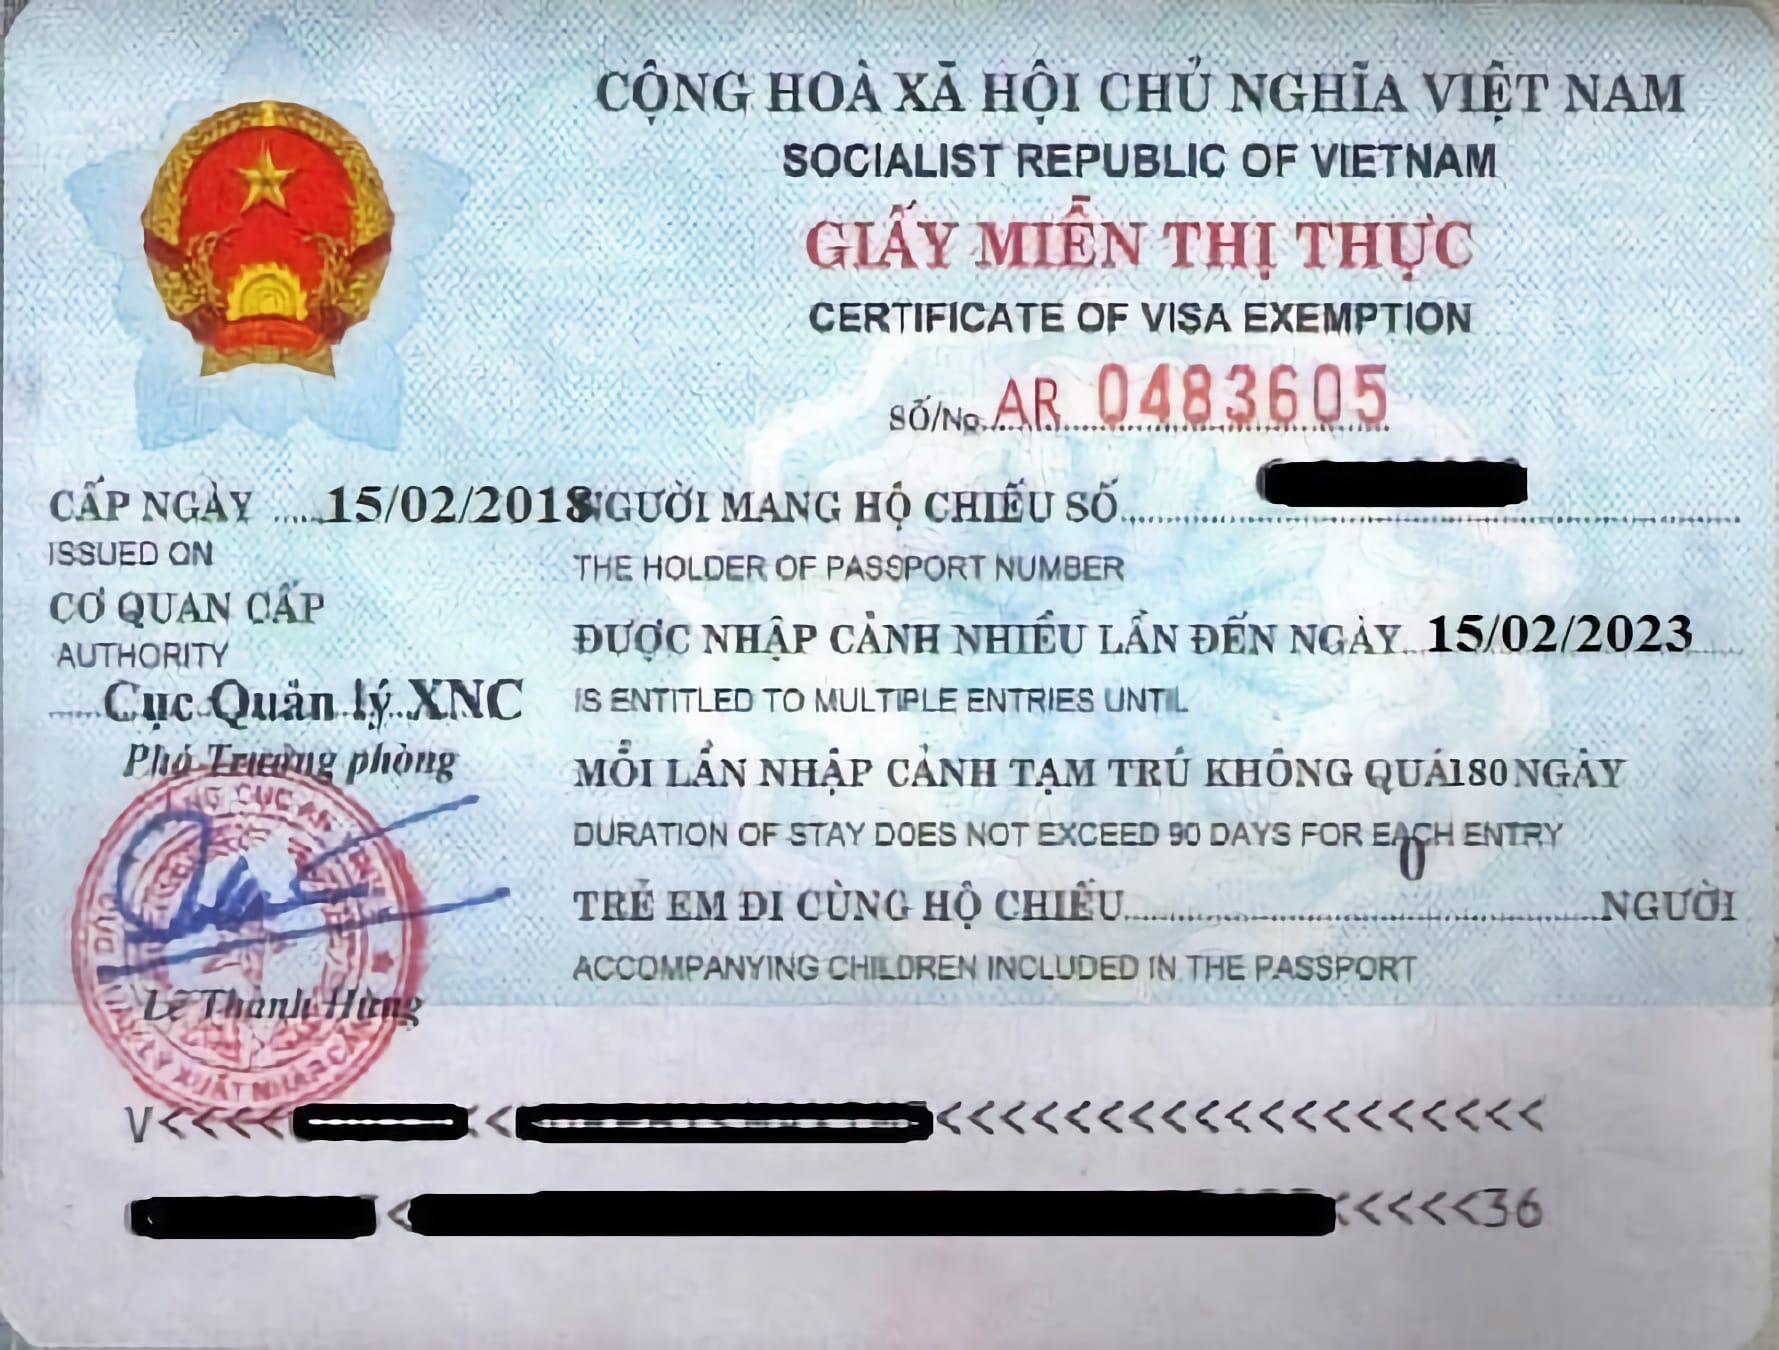 05-years-Vietnam-visa-exemption-certificate-sample.jpg